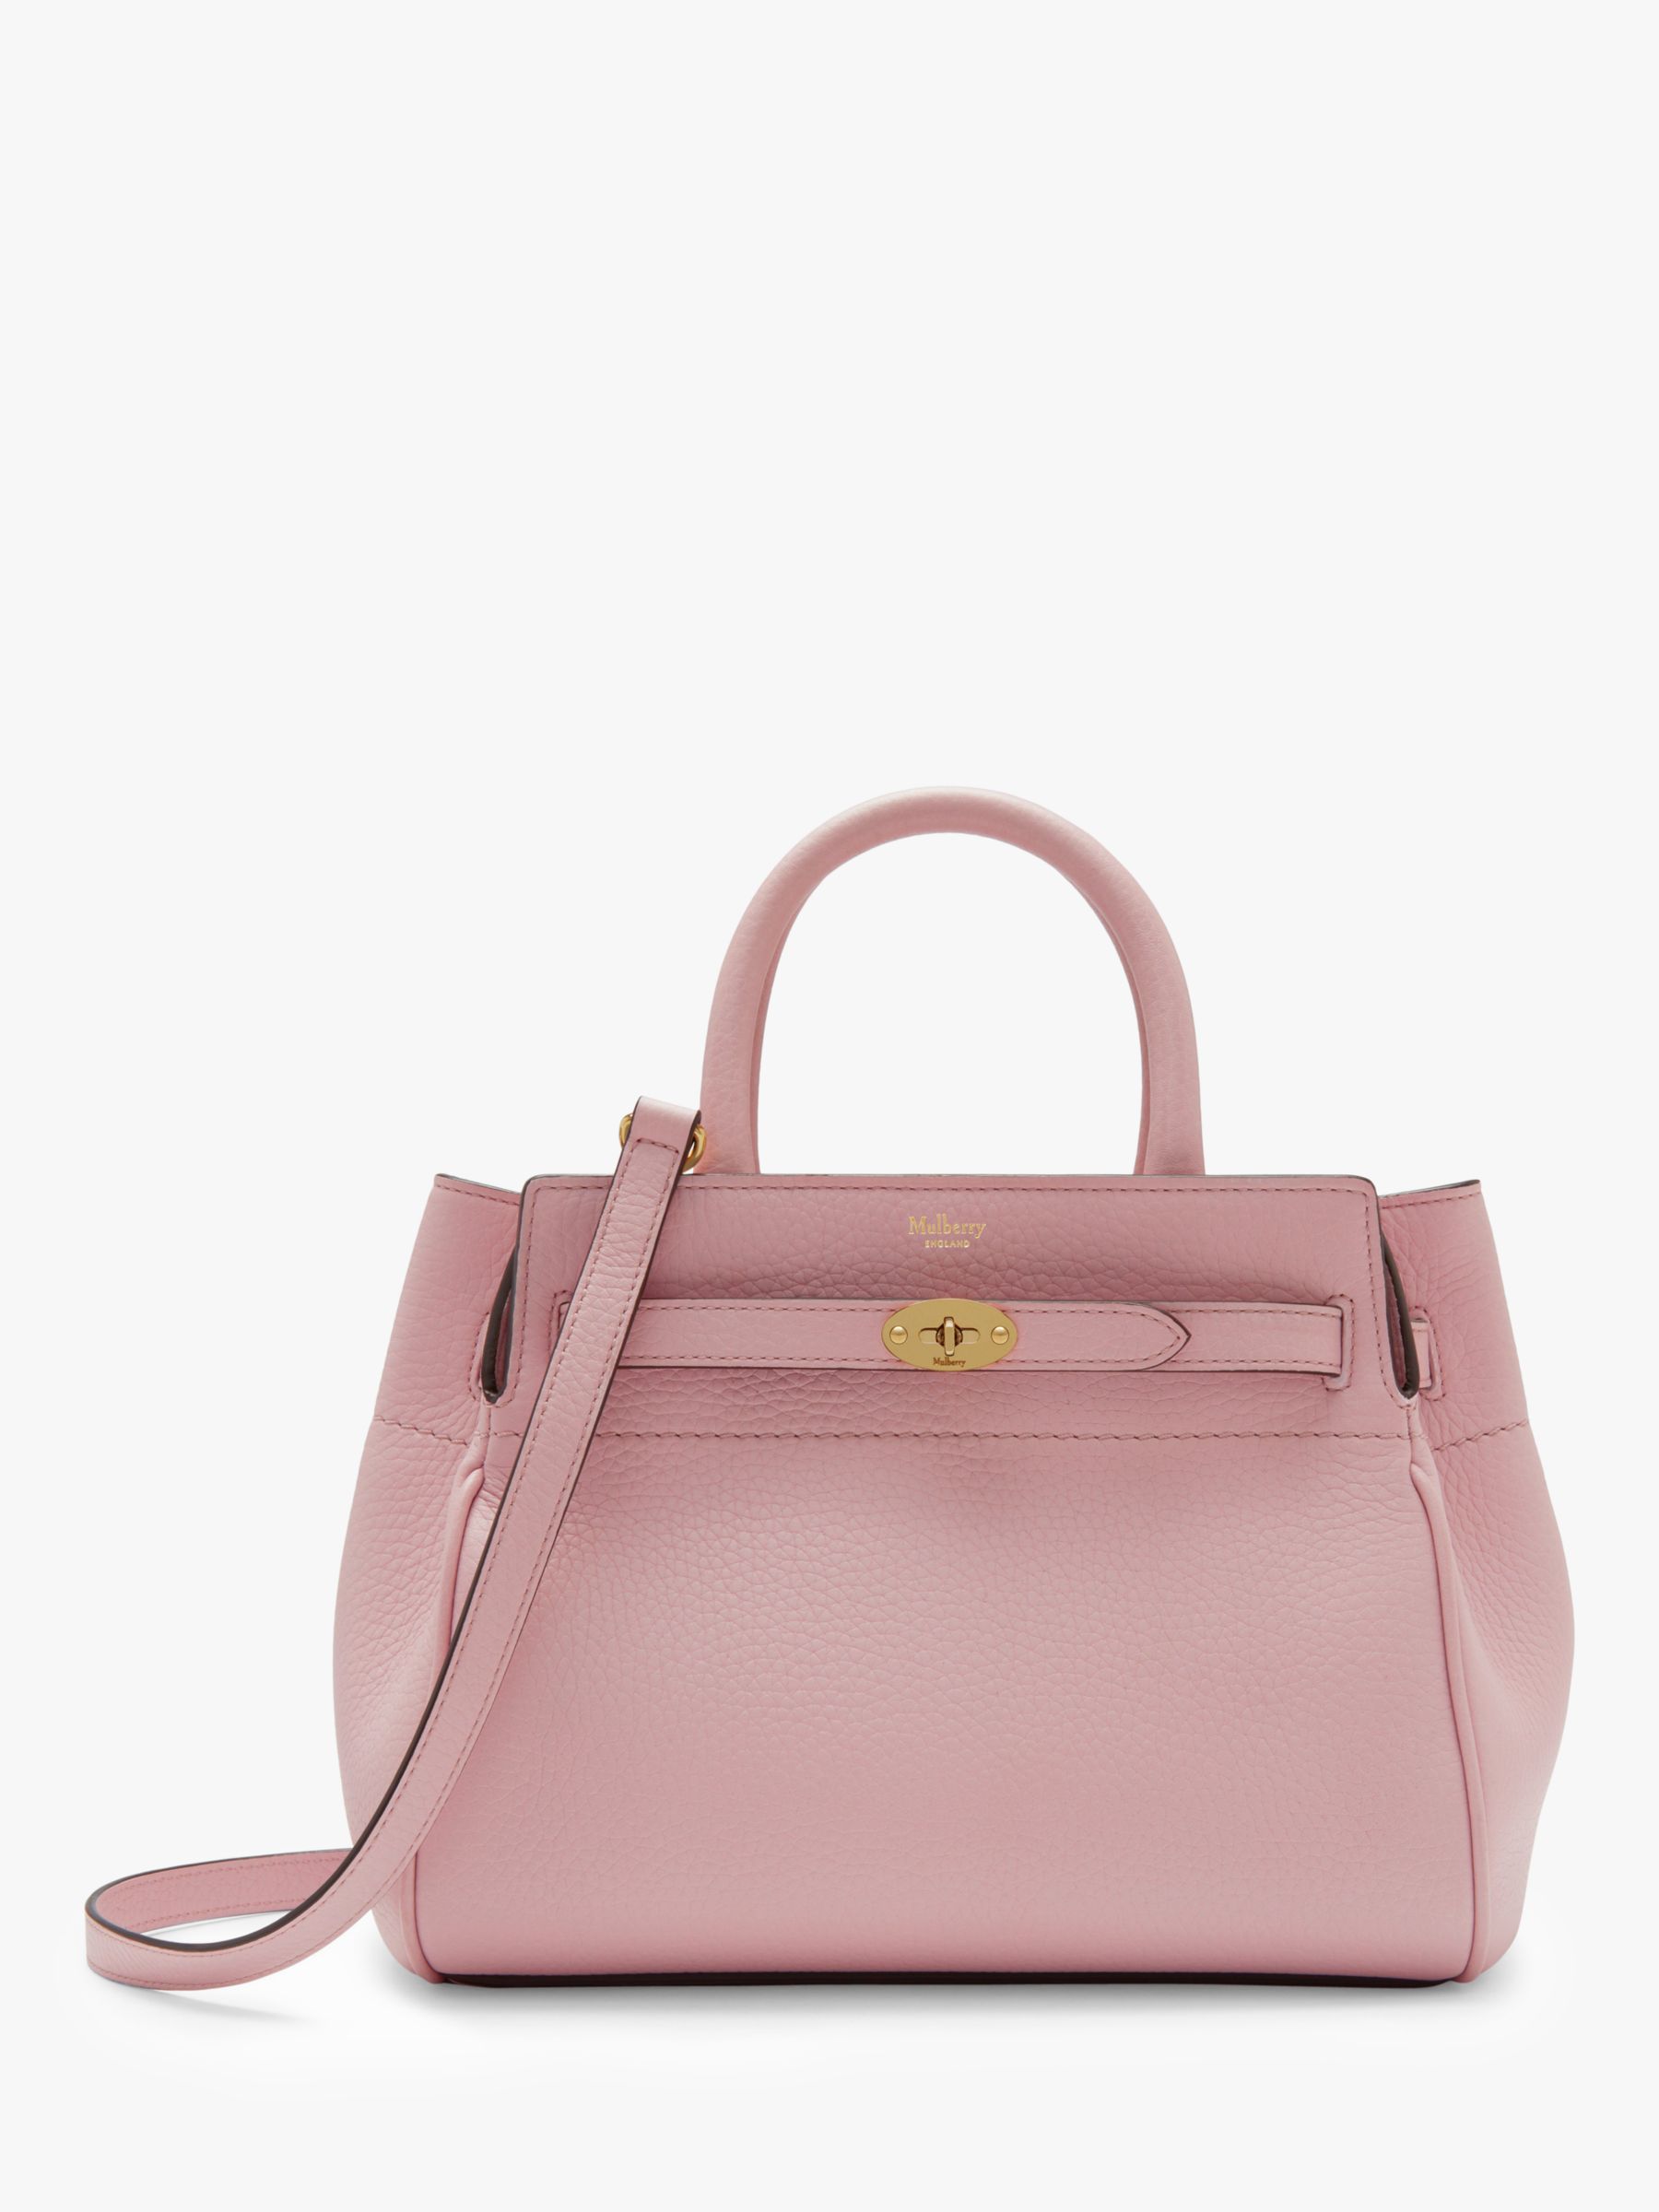 pink leather handbags